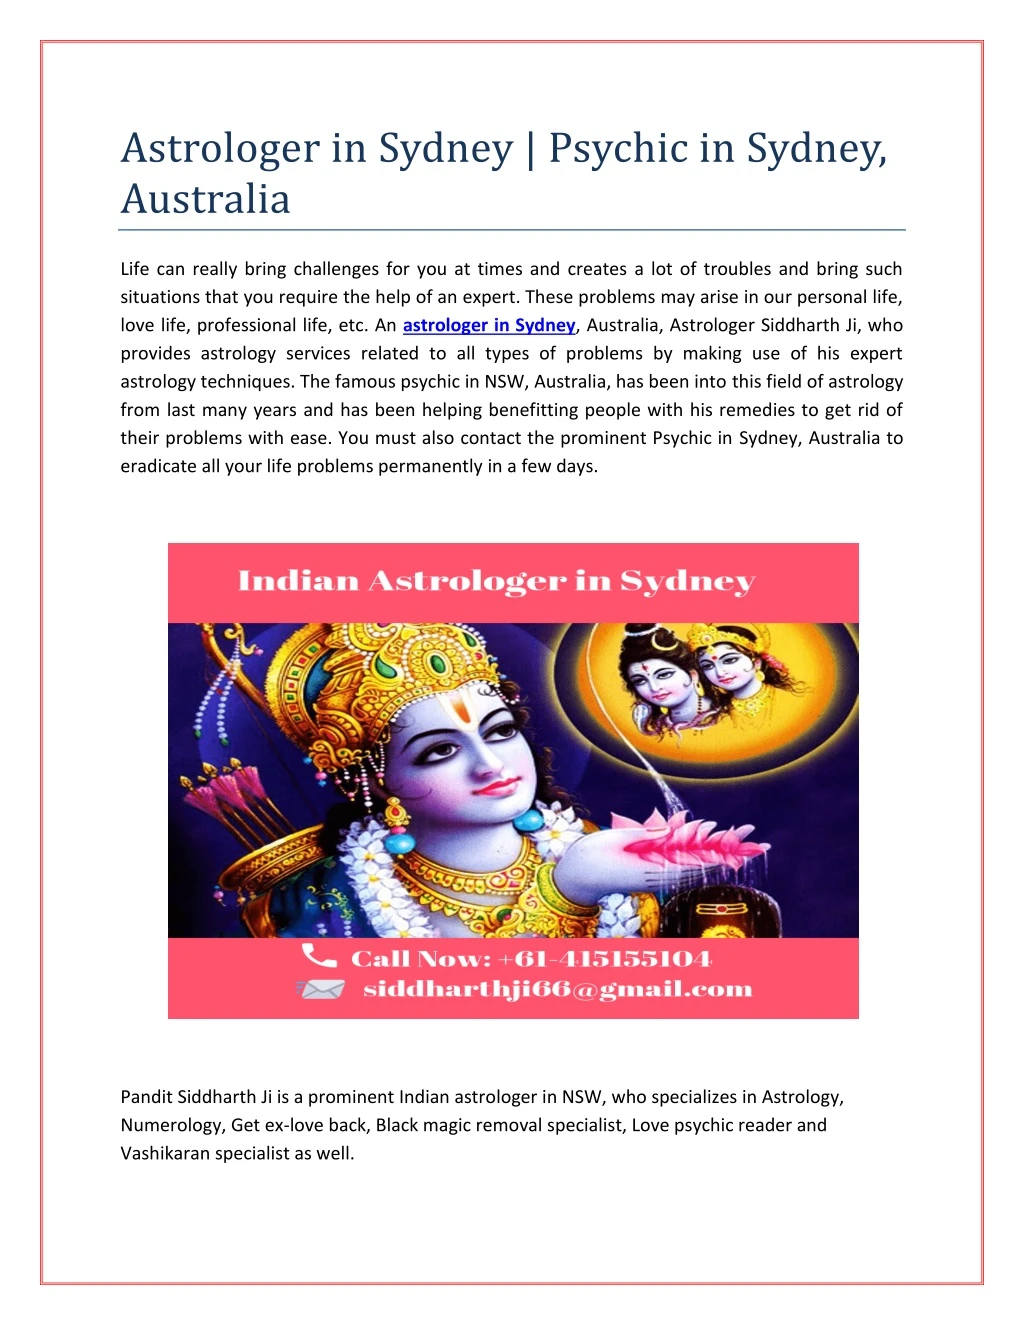 astrologer in sydney psychic in sydney australia